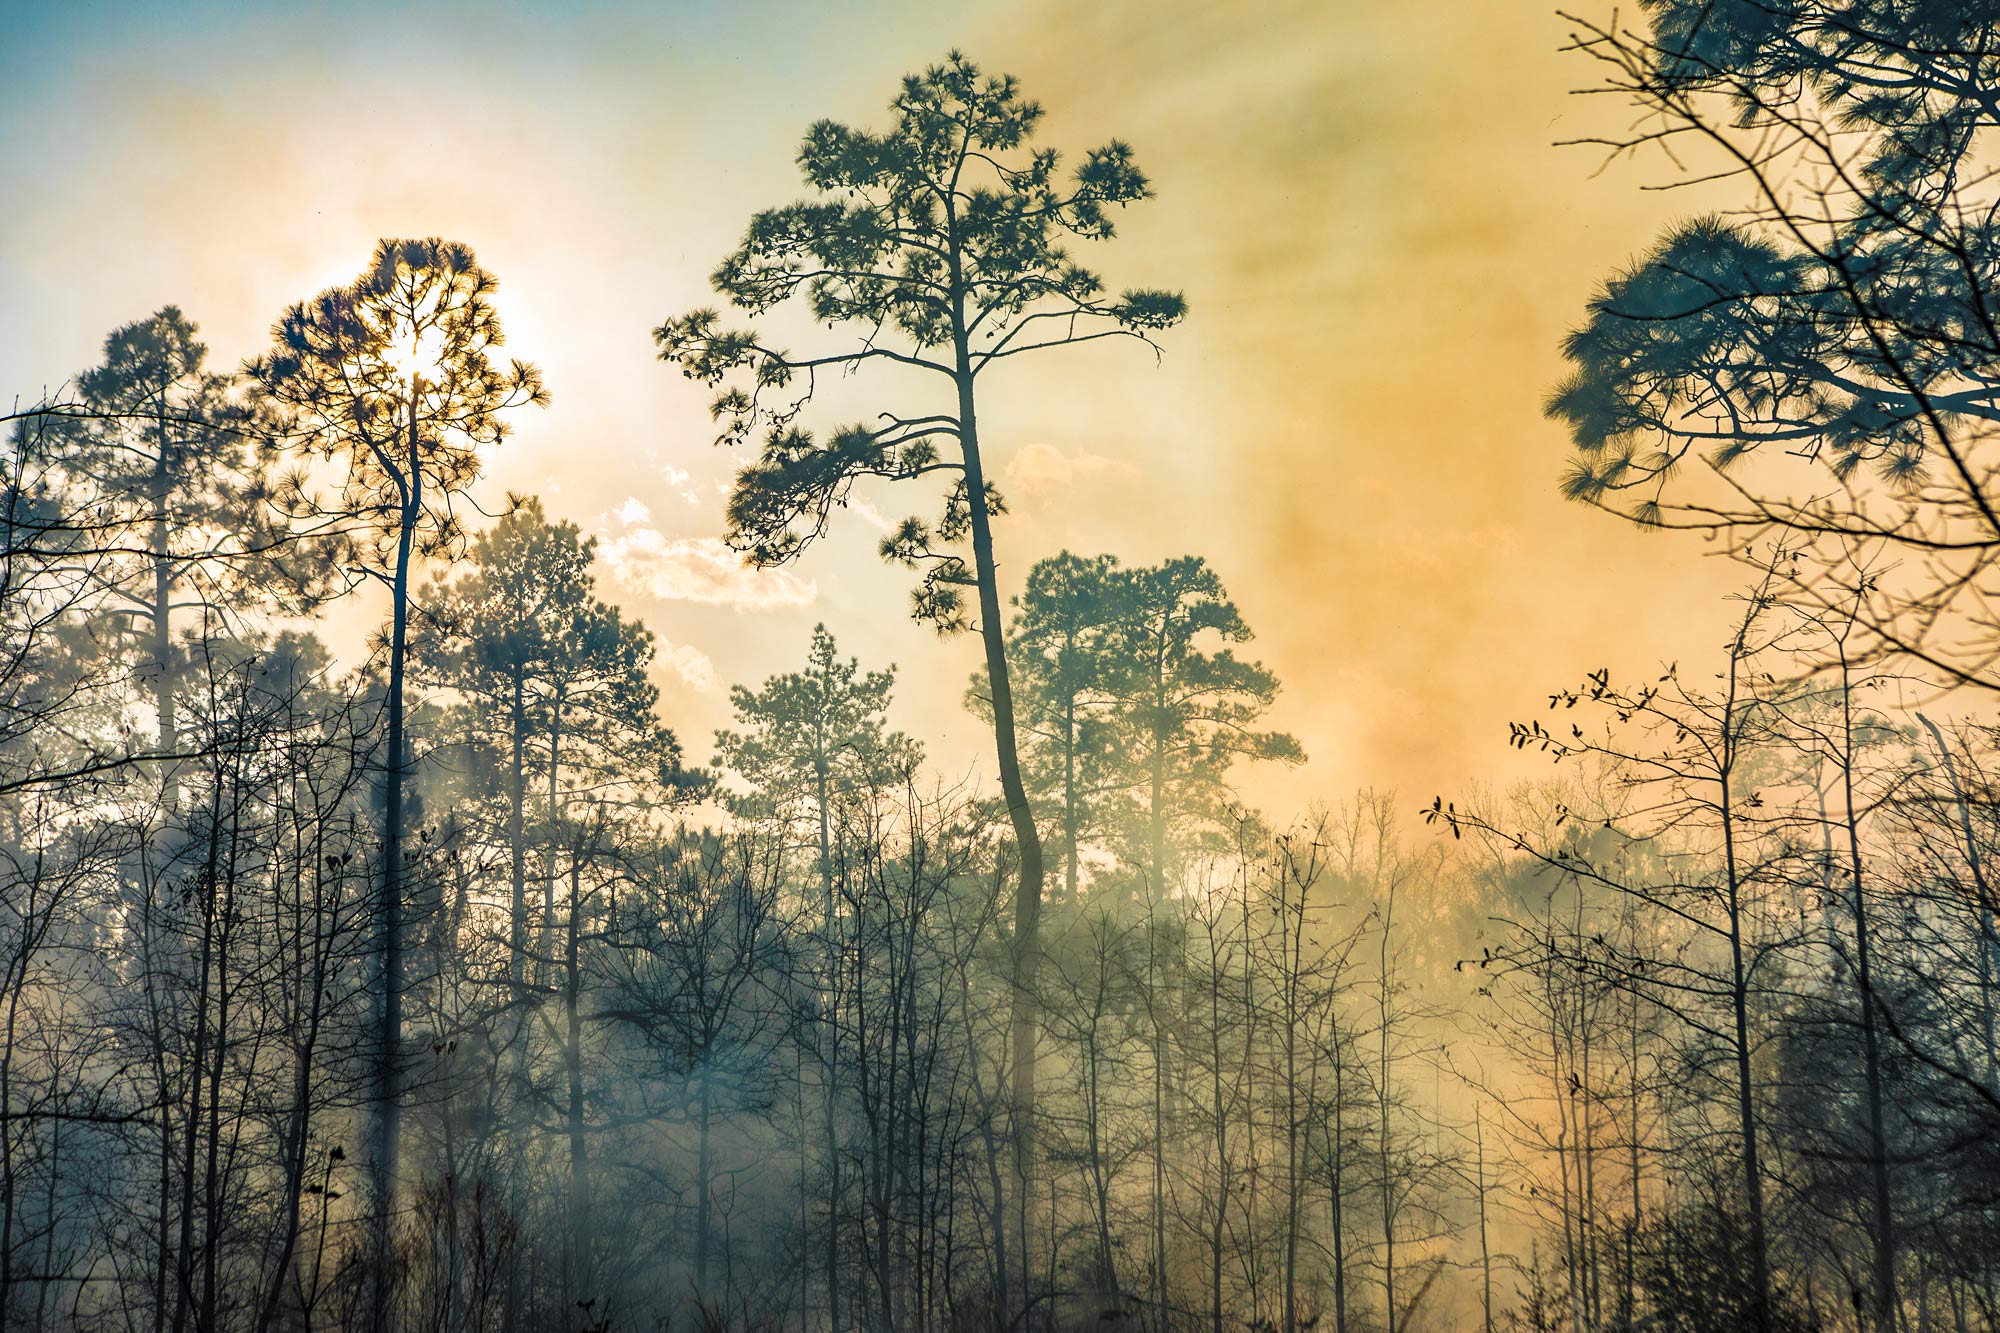 Smokey Pines, Controlled Burn at Roy E. Larson Sandyland Sanctuary